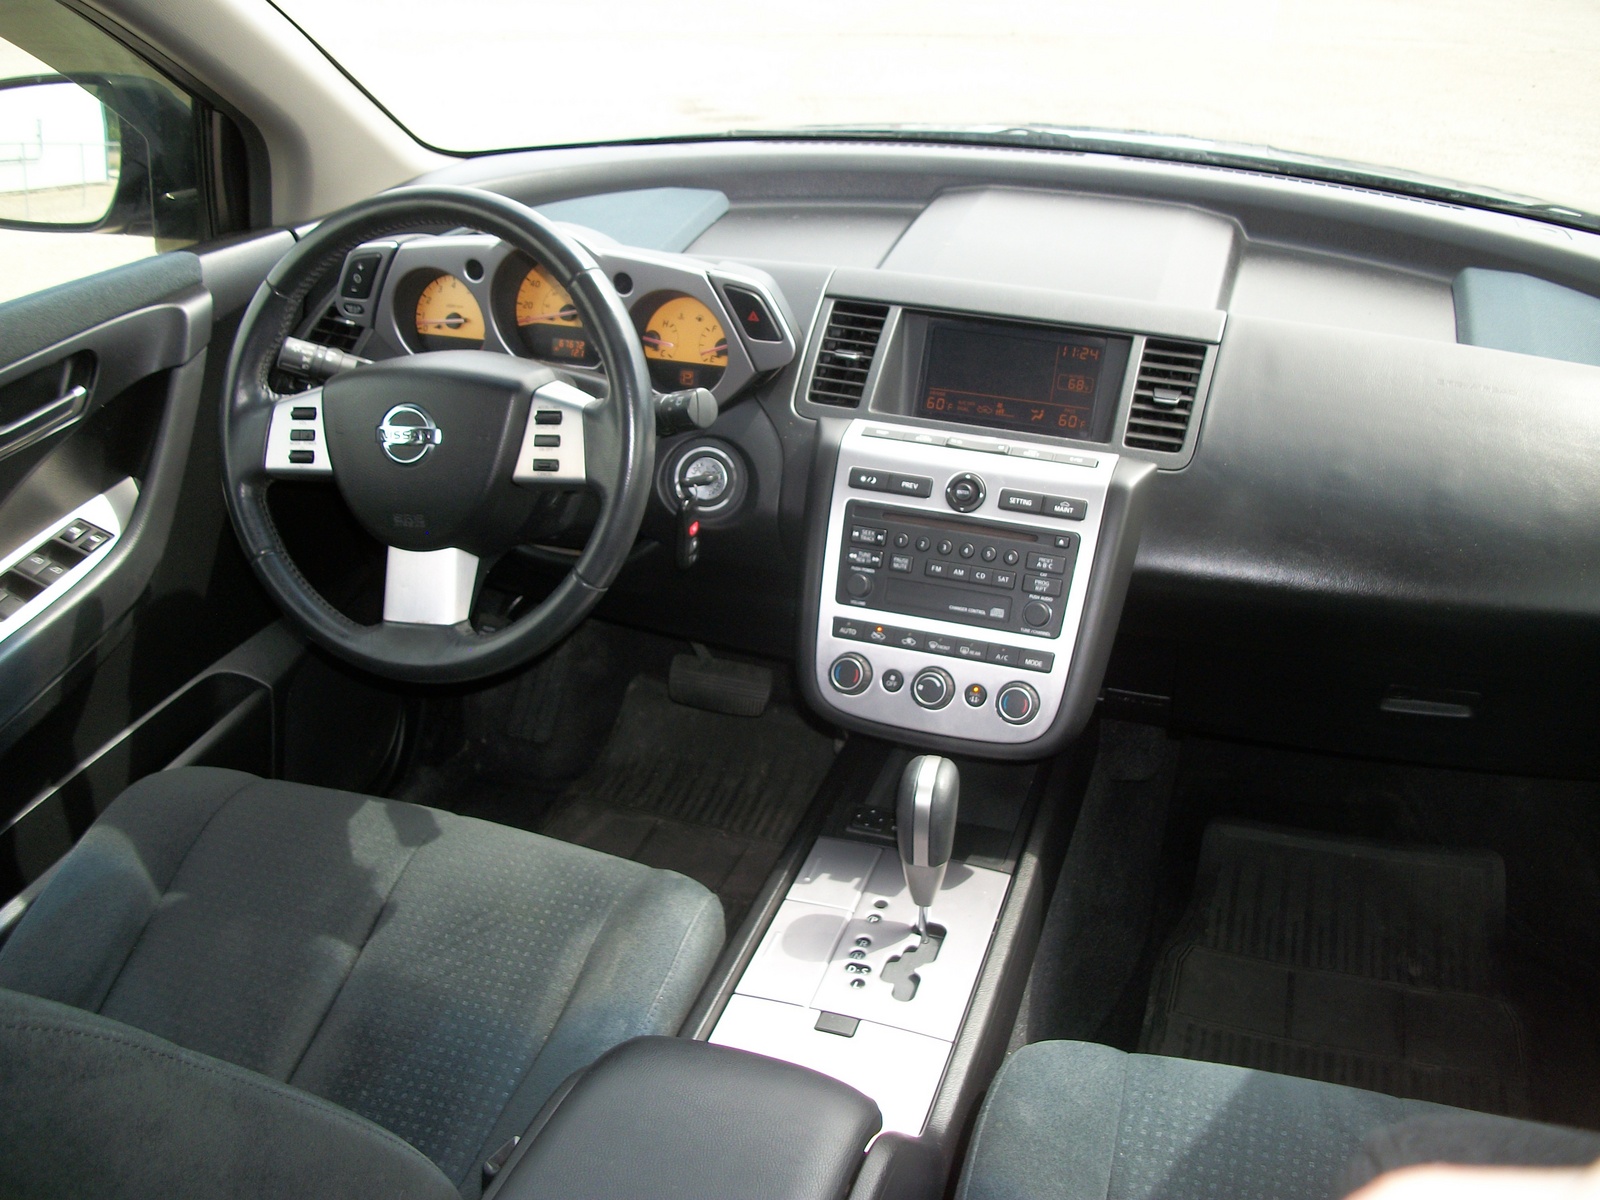 2005 Nissan murano interior pictures